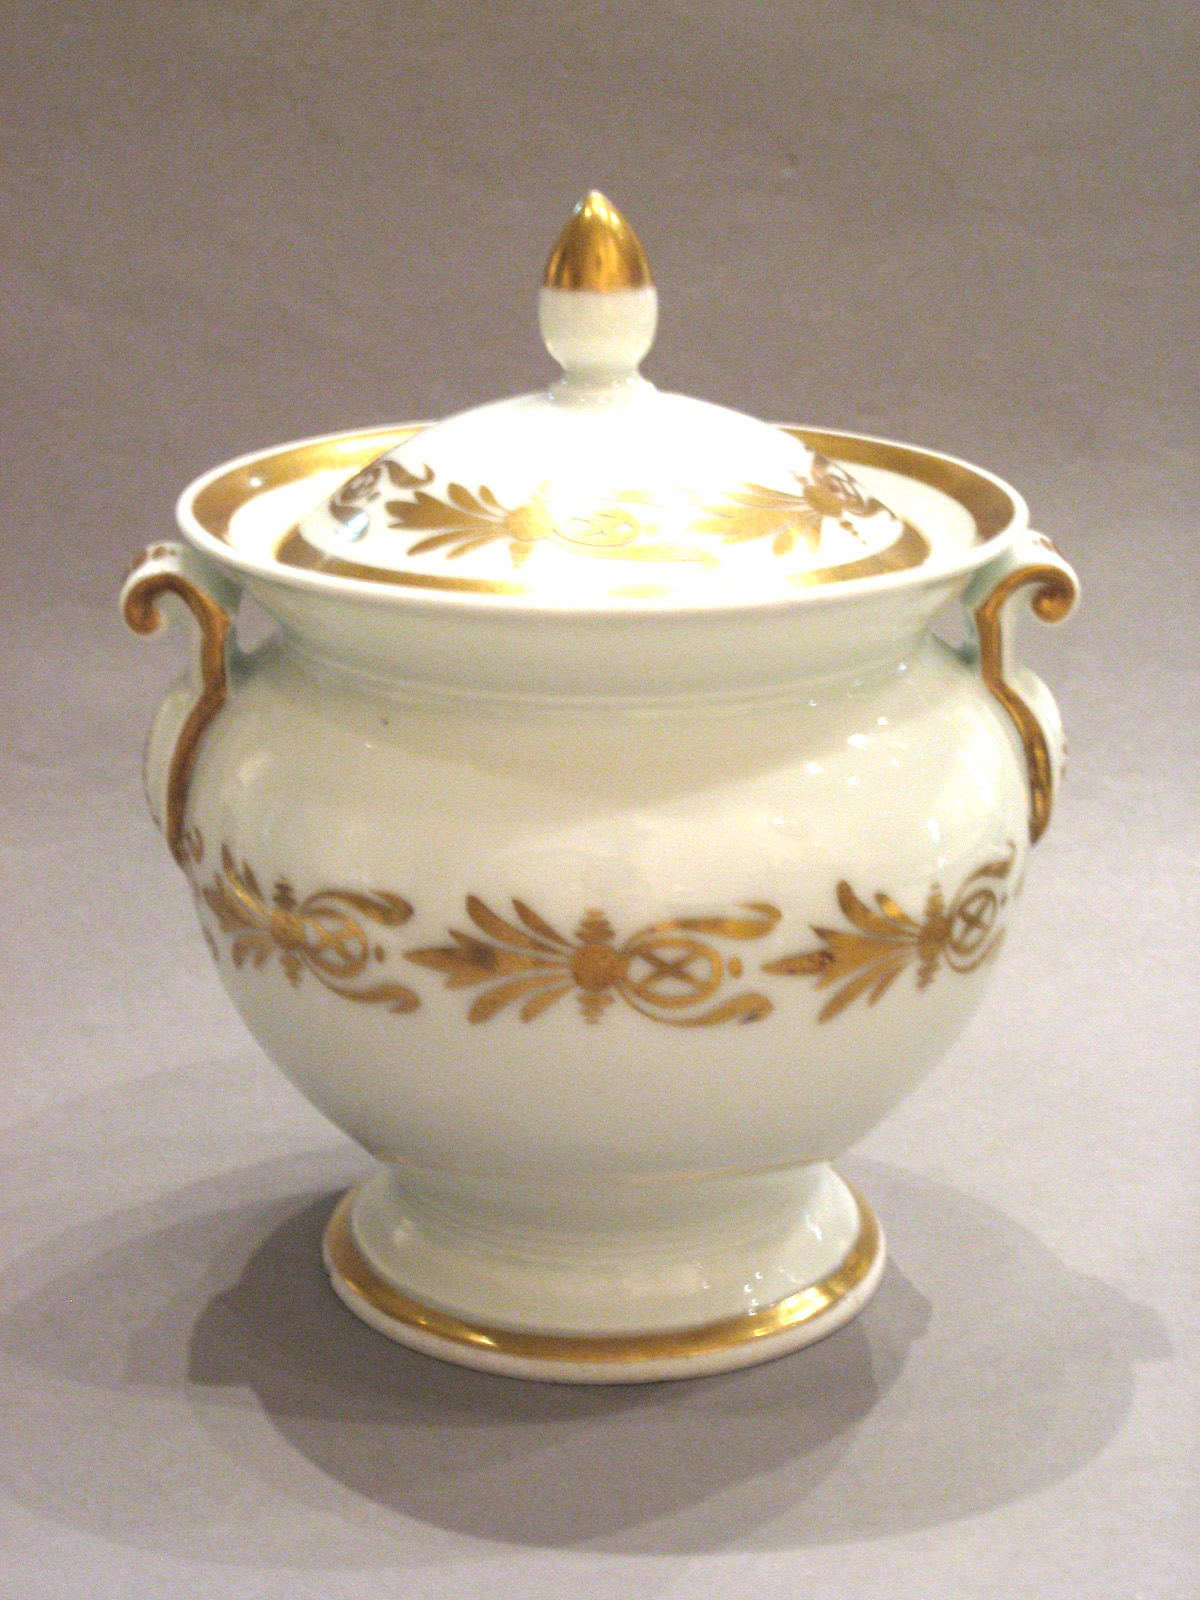 Ceramics - Sugar bowl